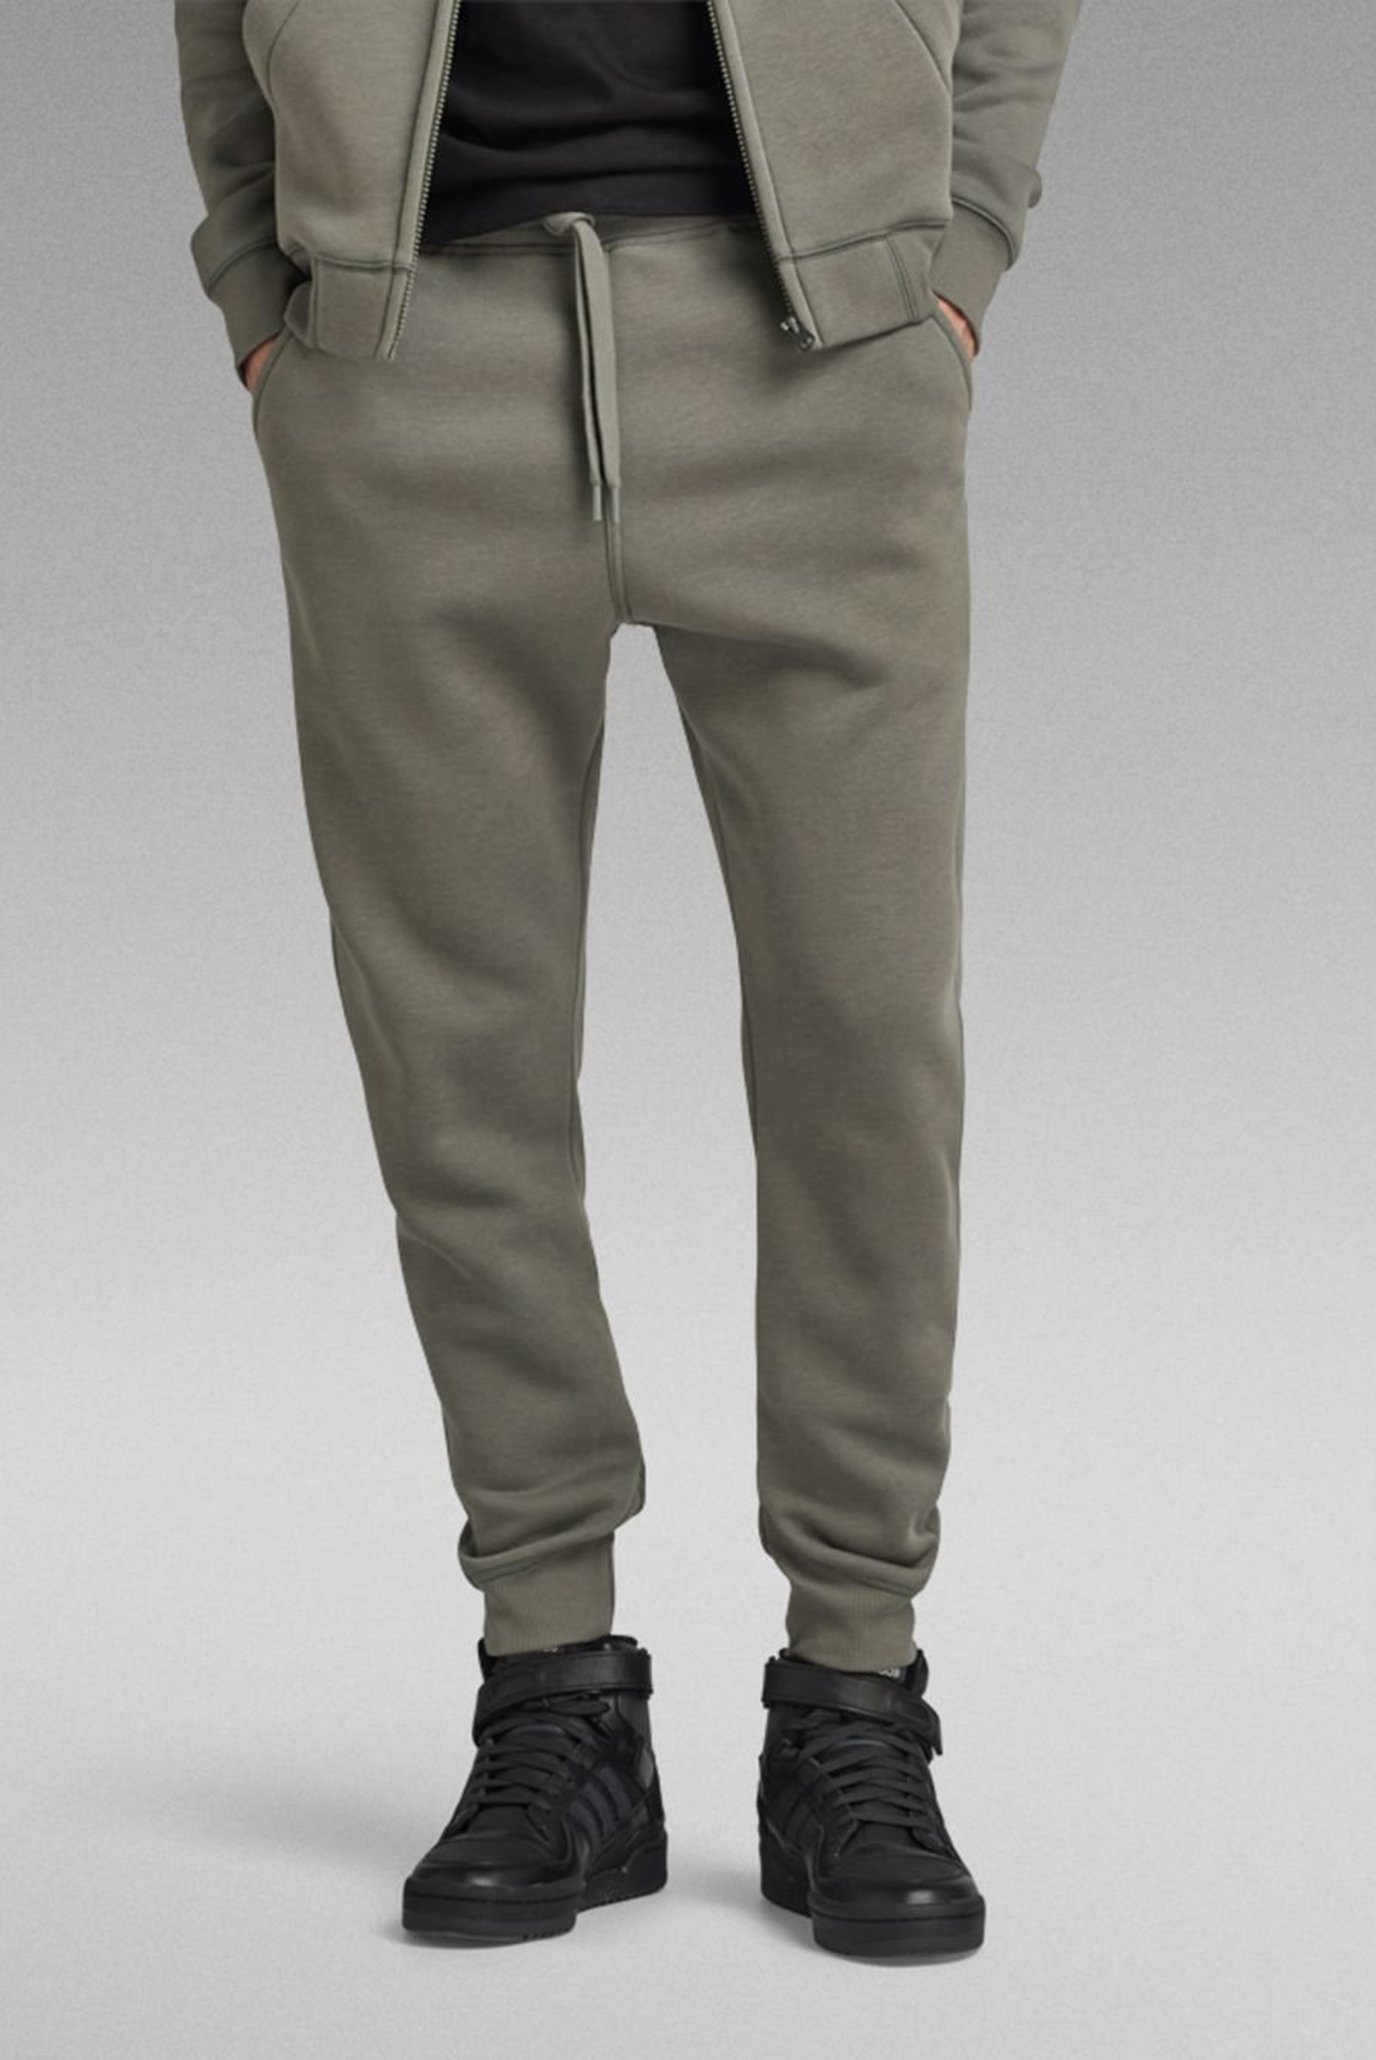 Мужские серые спортивные брюки Premium core type c sw 1